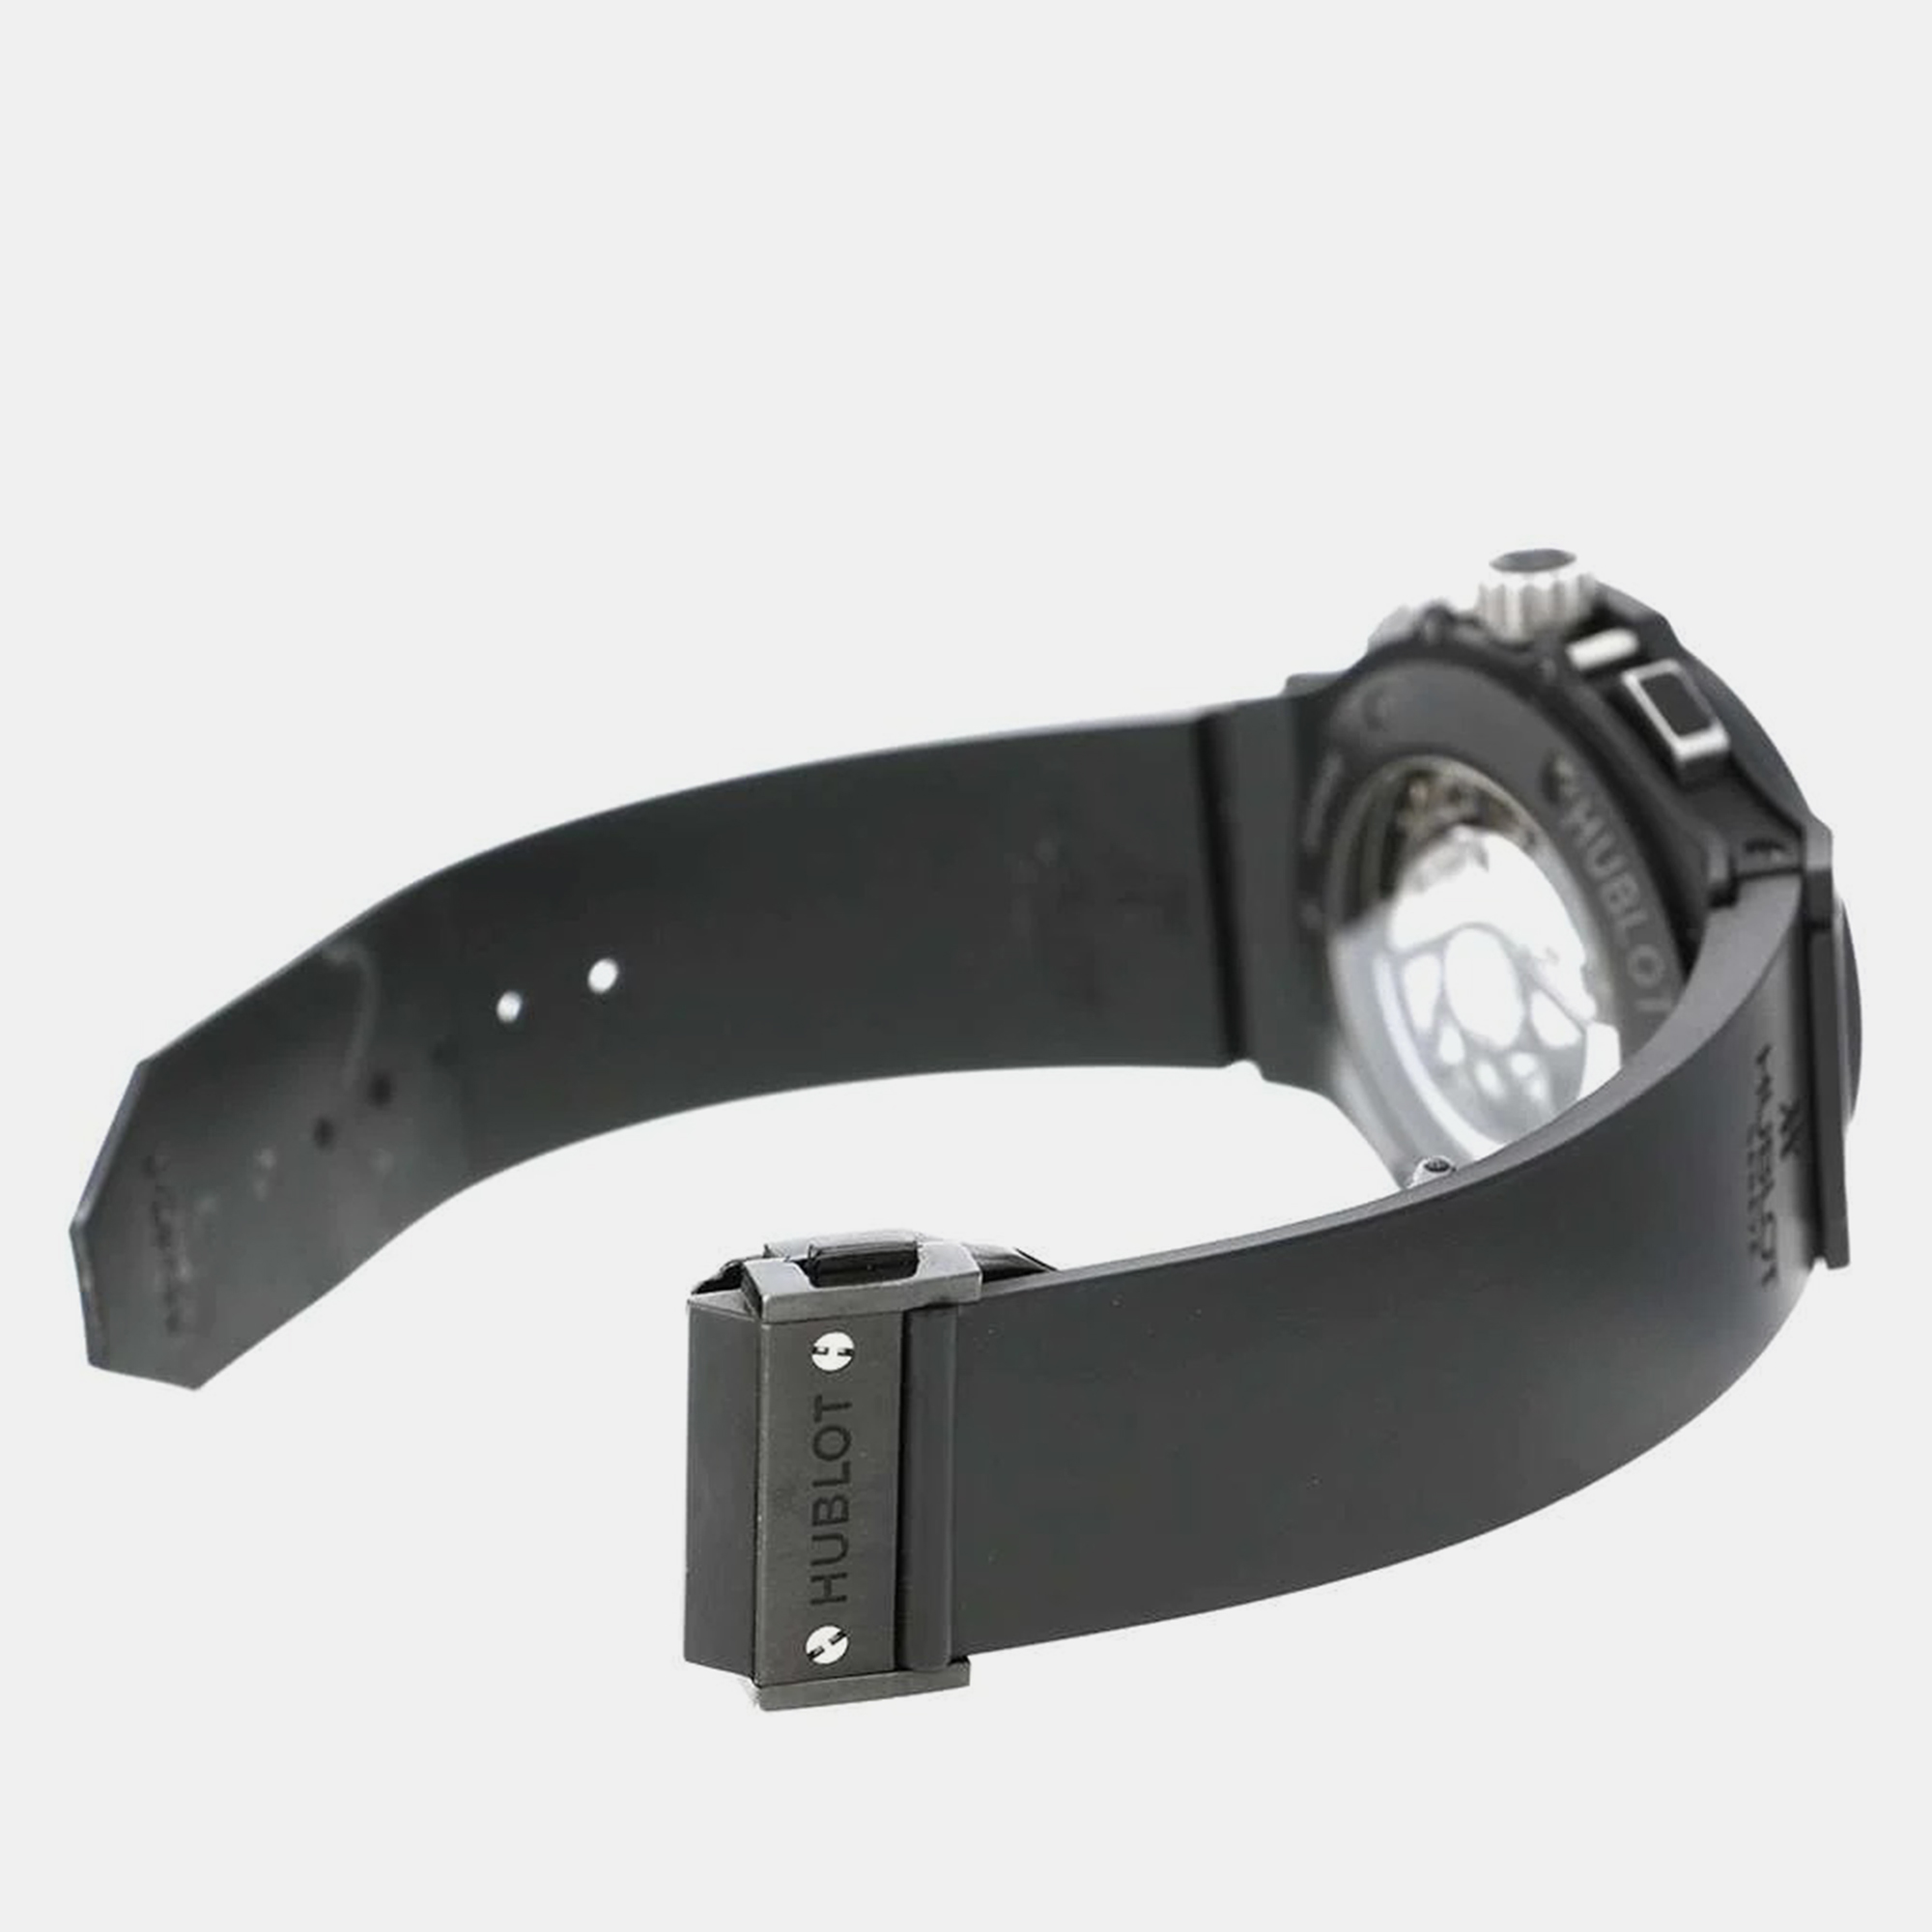 Hublot Black Ceramic Big Bang 301.CI.1770.RX Automatic Men's Wristwatch 48 Mm